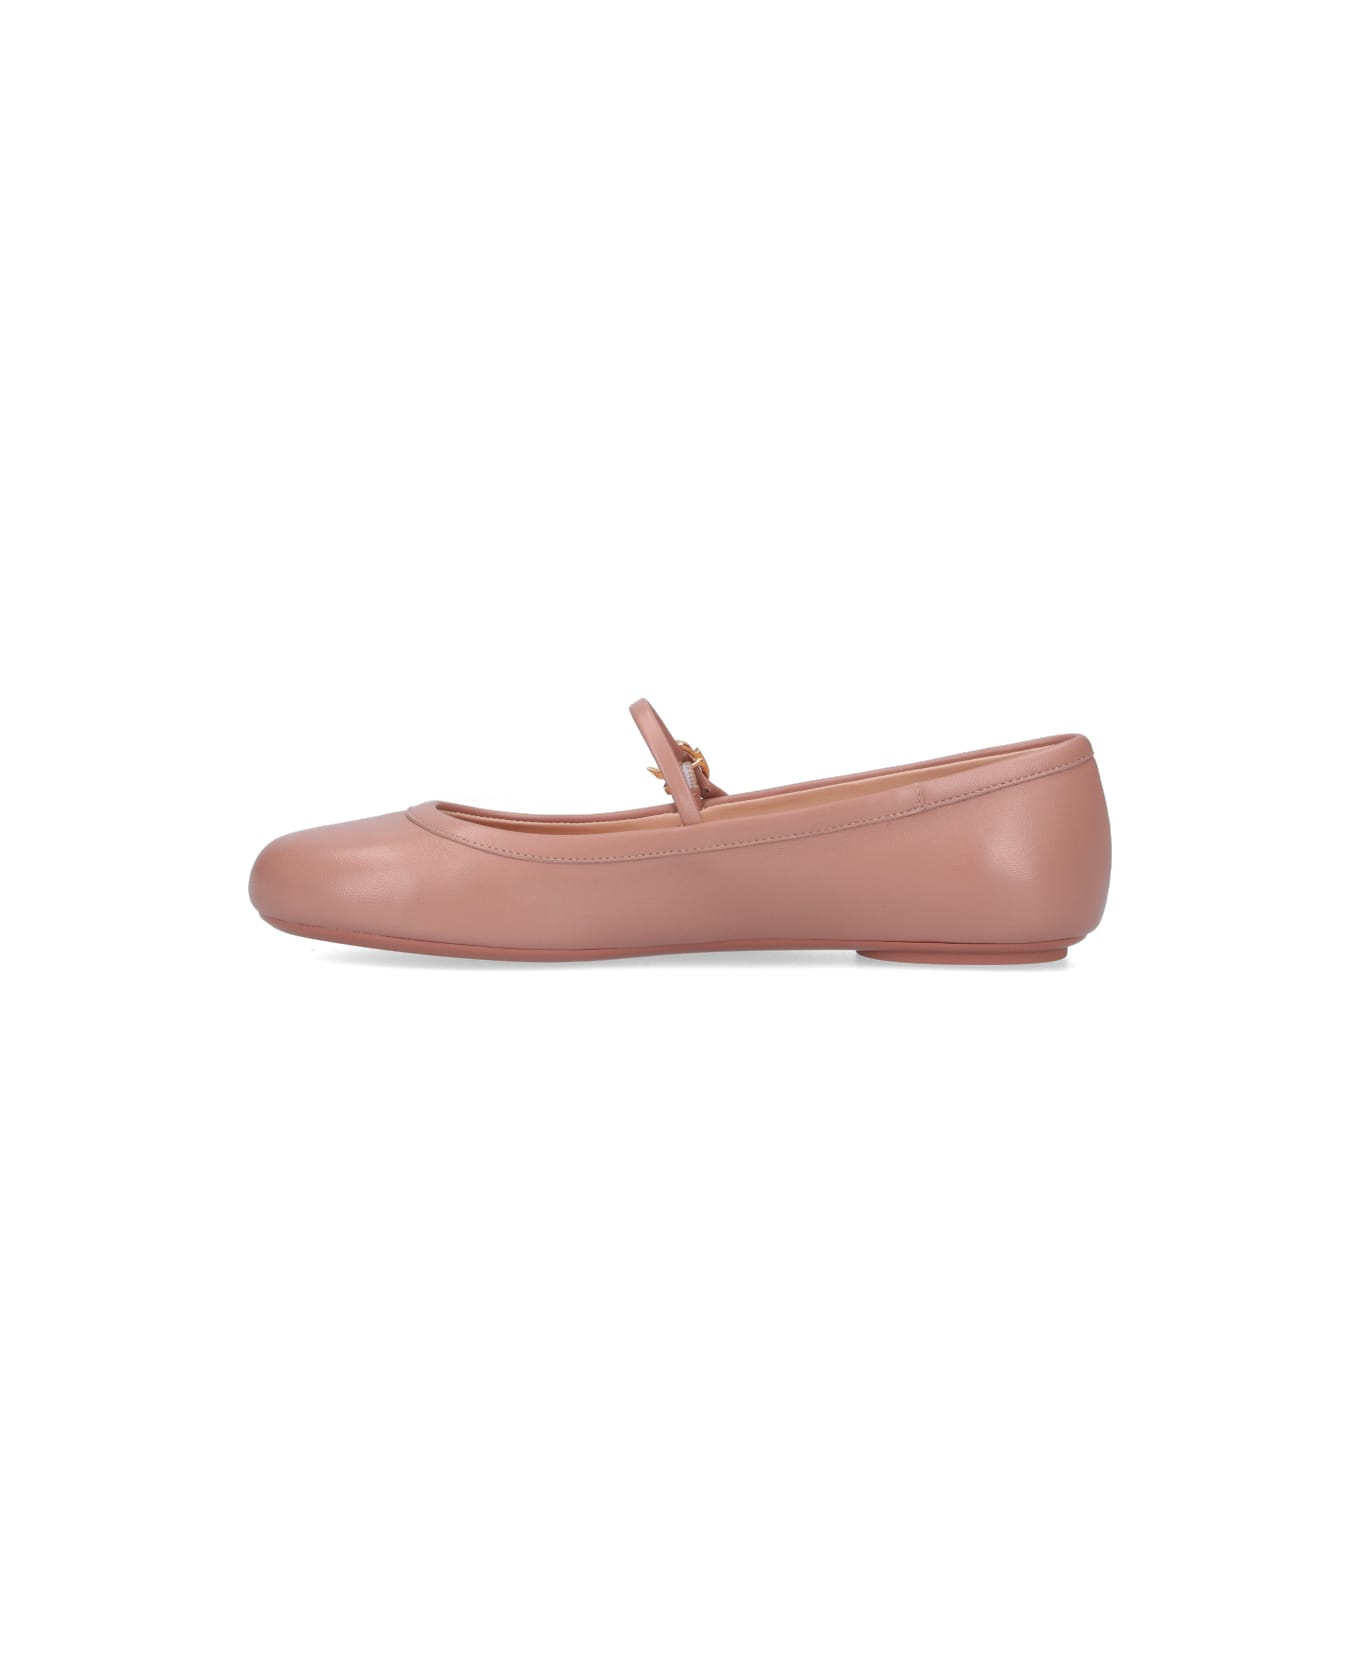 Gianvito Rossi 'carla' Ballet Flats - Pink フラットシューズ